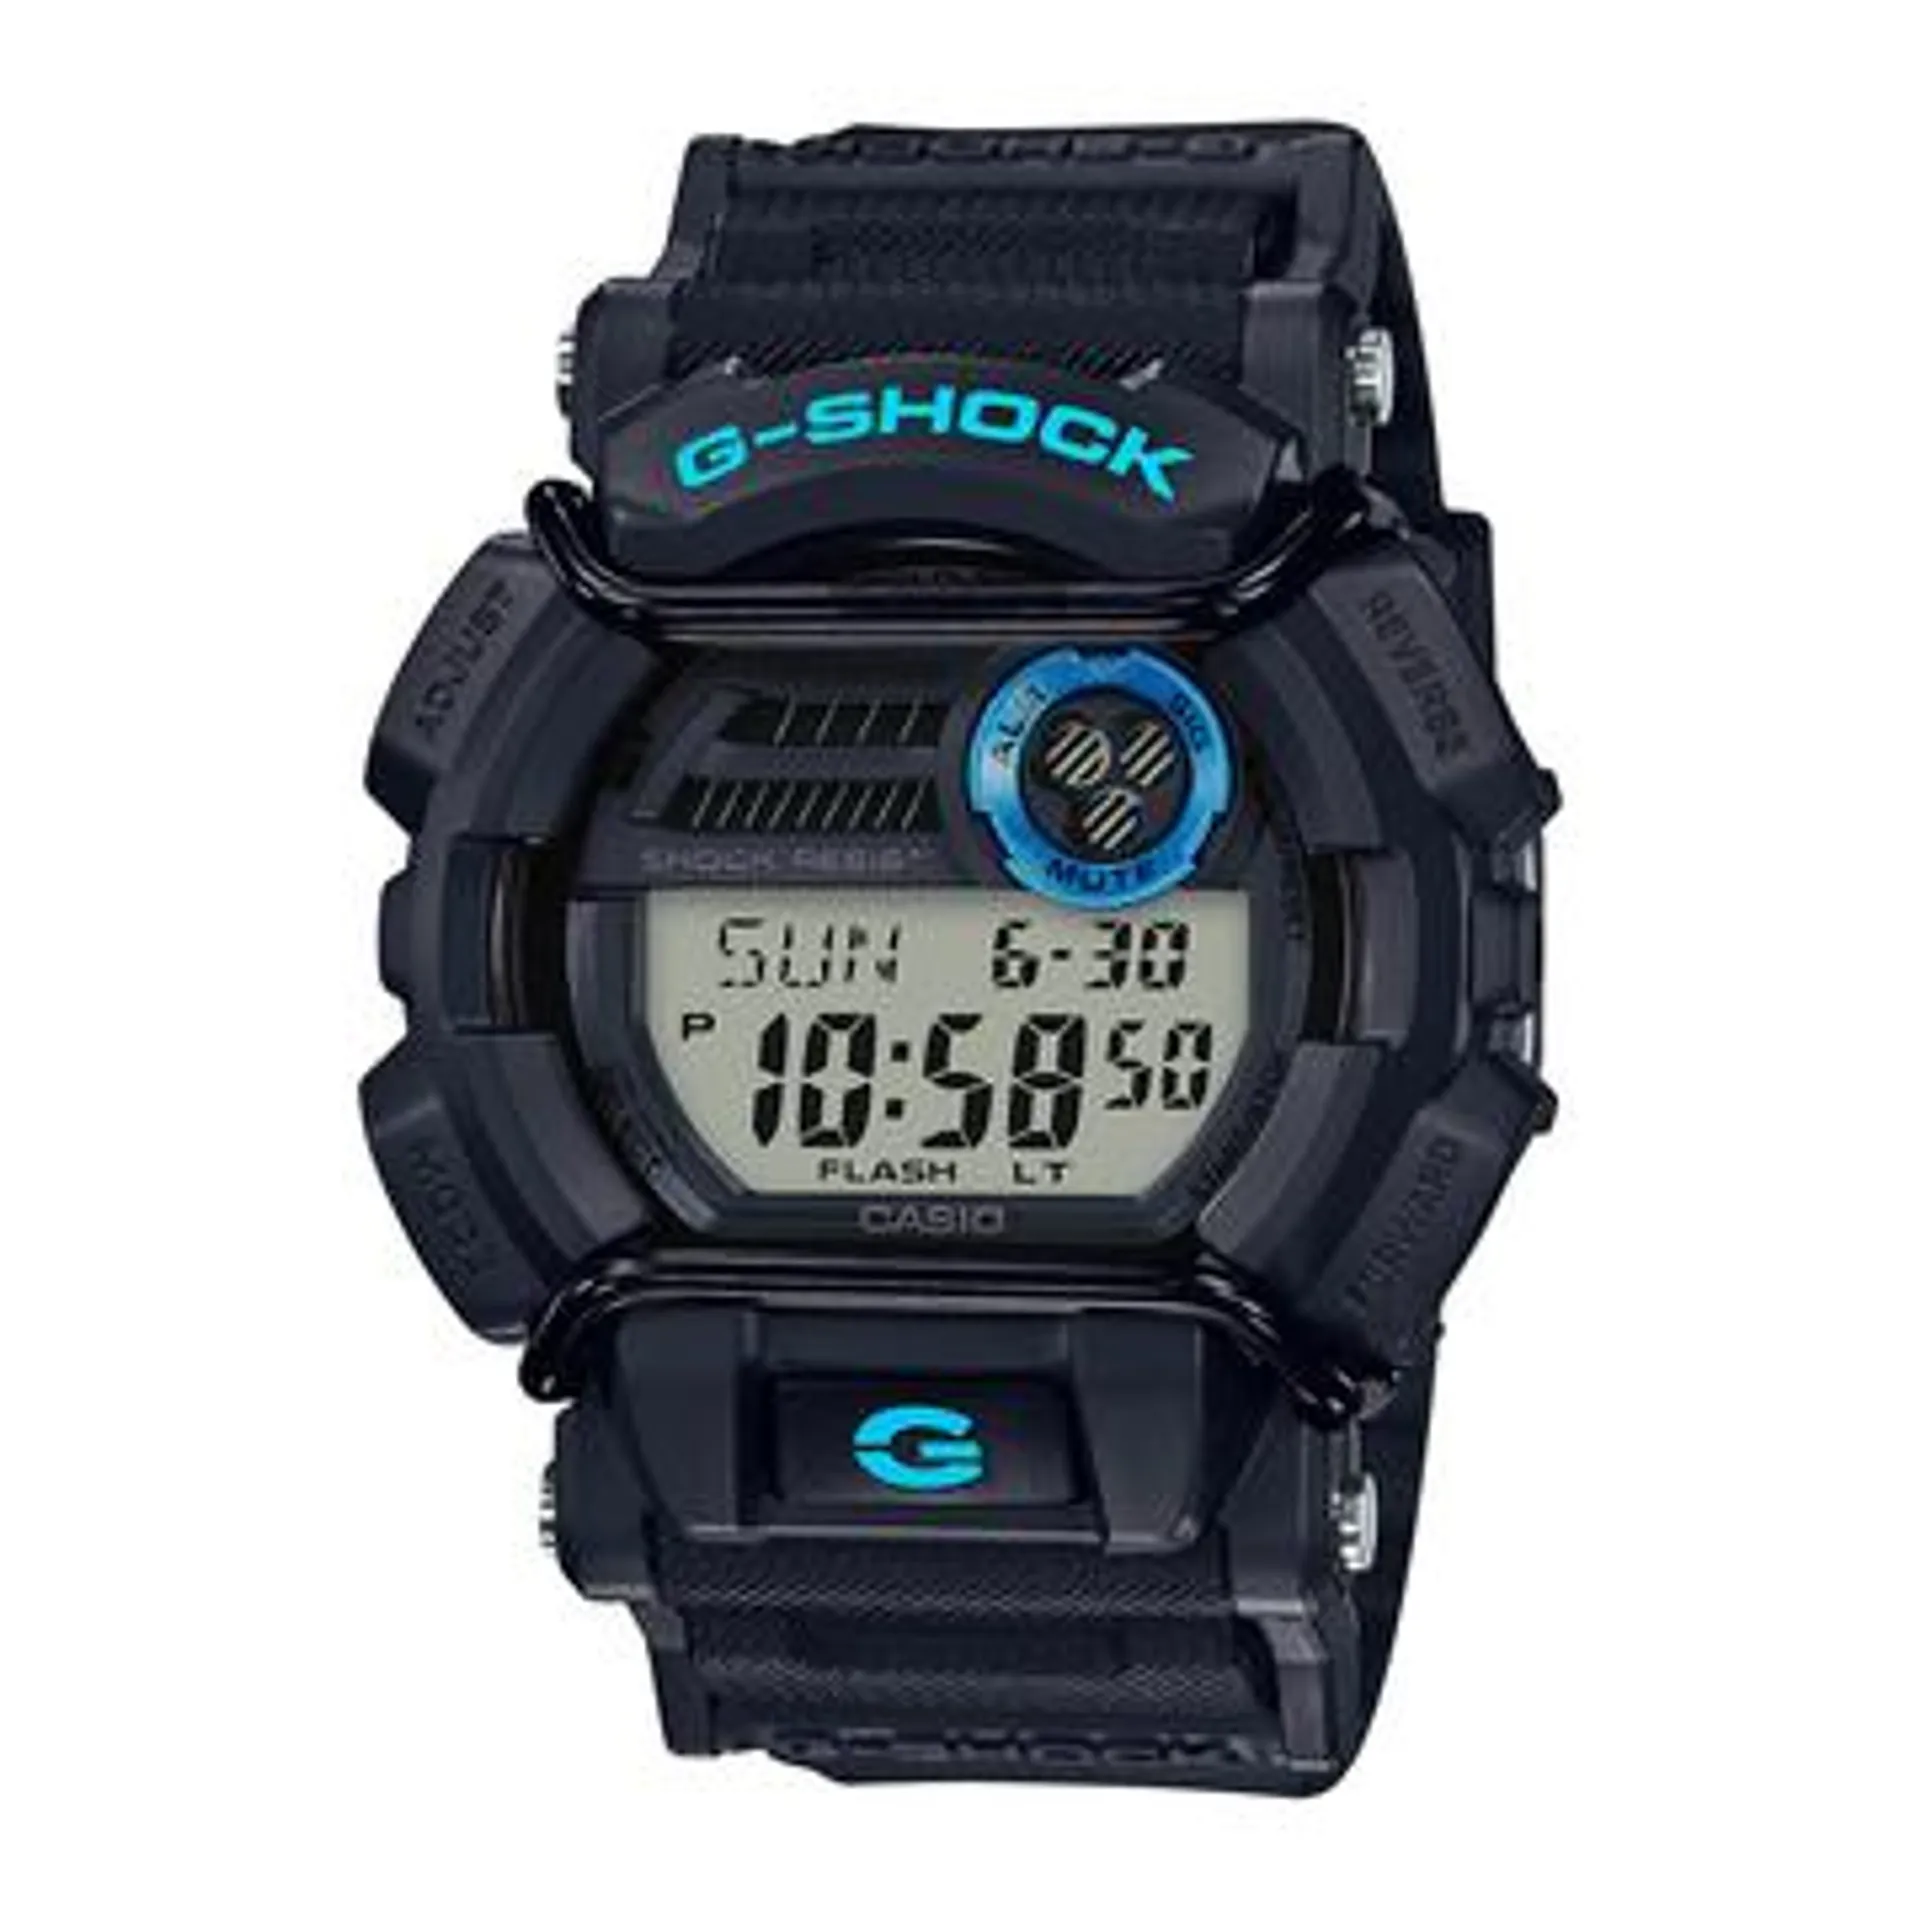 G-Shock Mens Watch